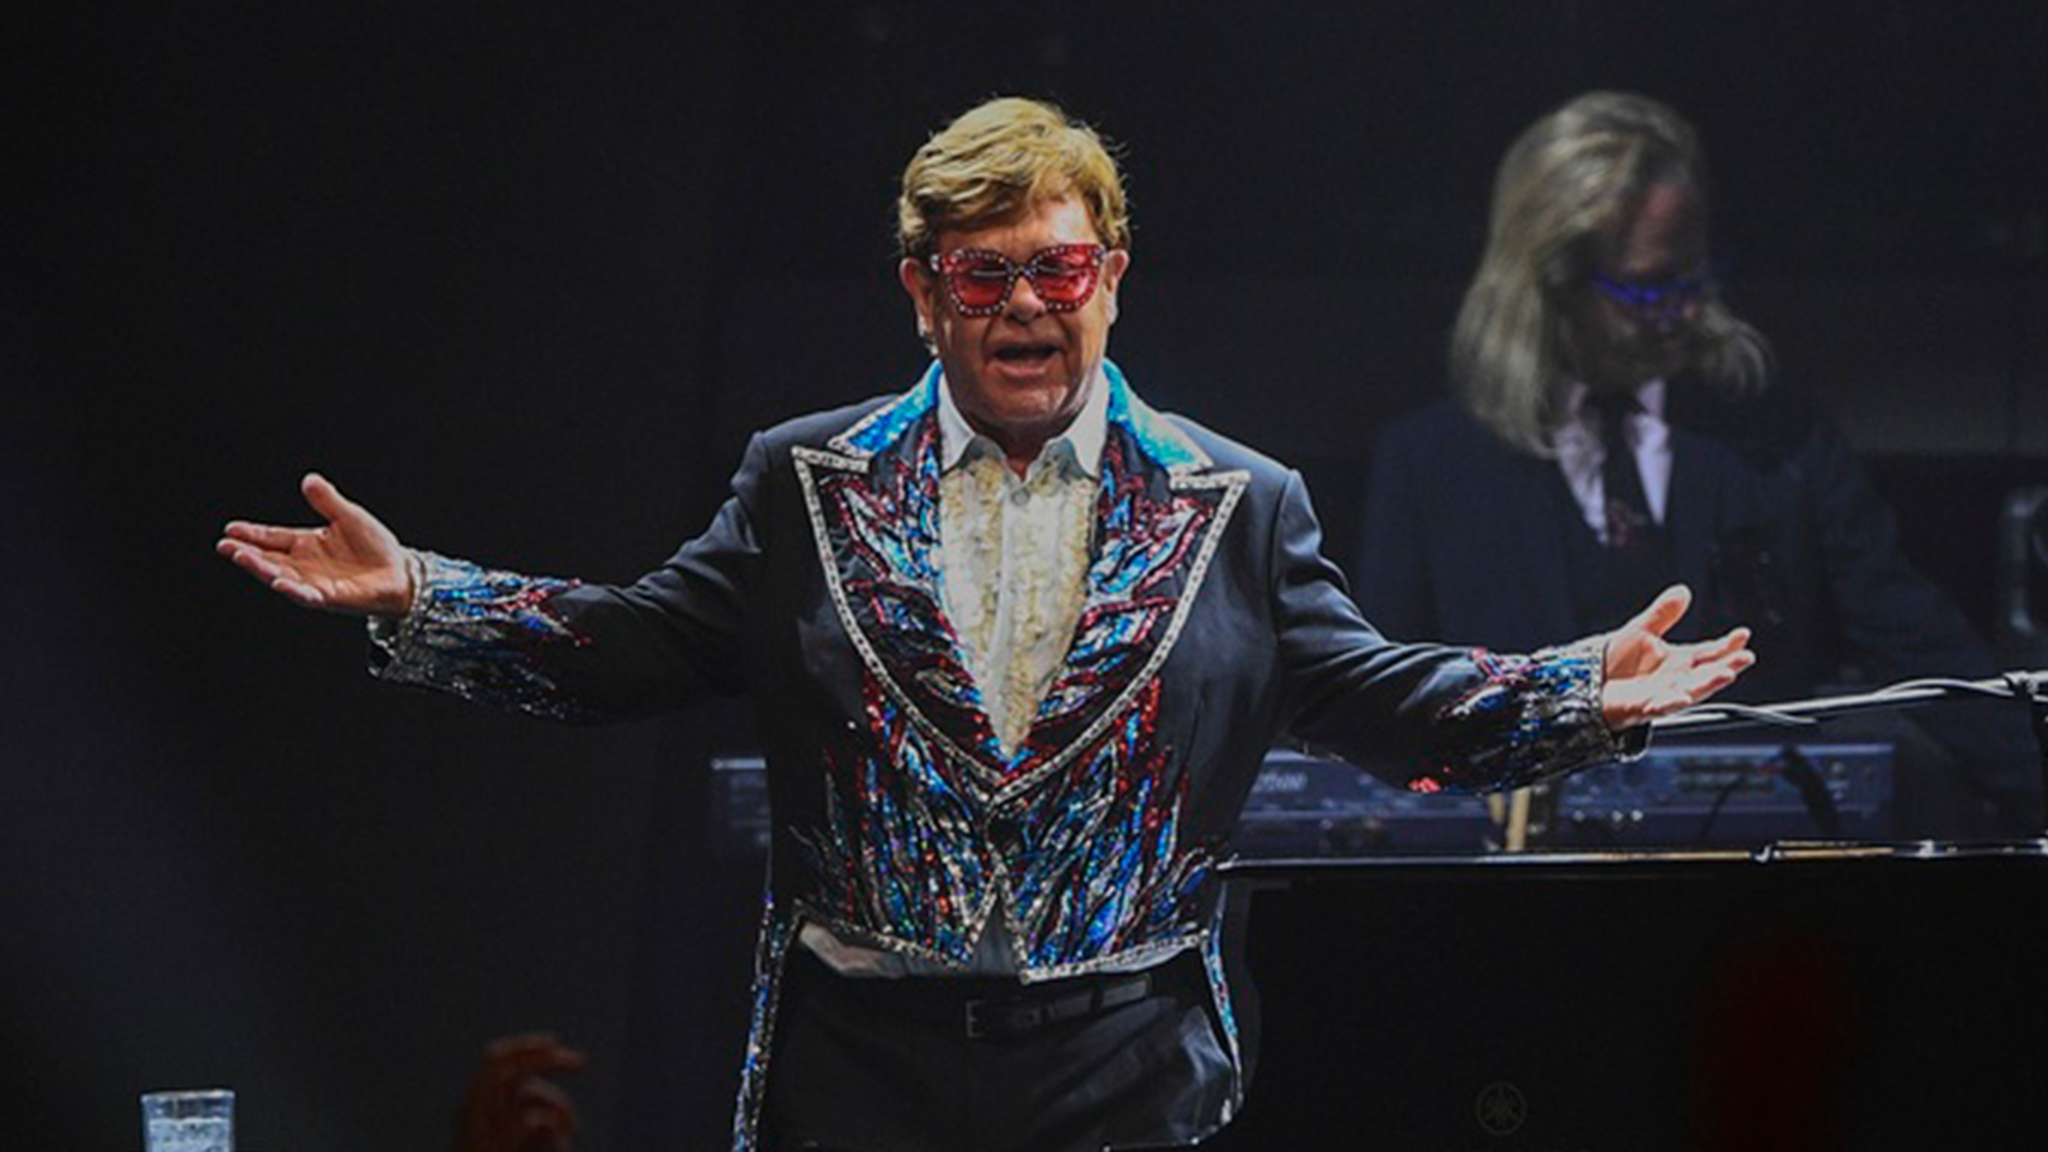 Elton John performs "Goodbye Yellow Brick Road", the last concert of the farewell tour